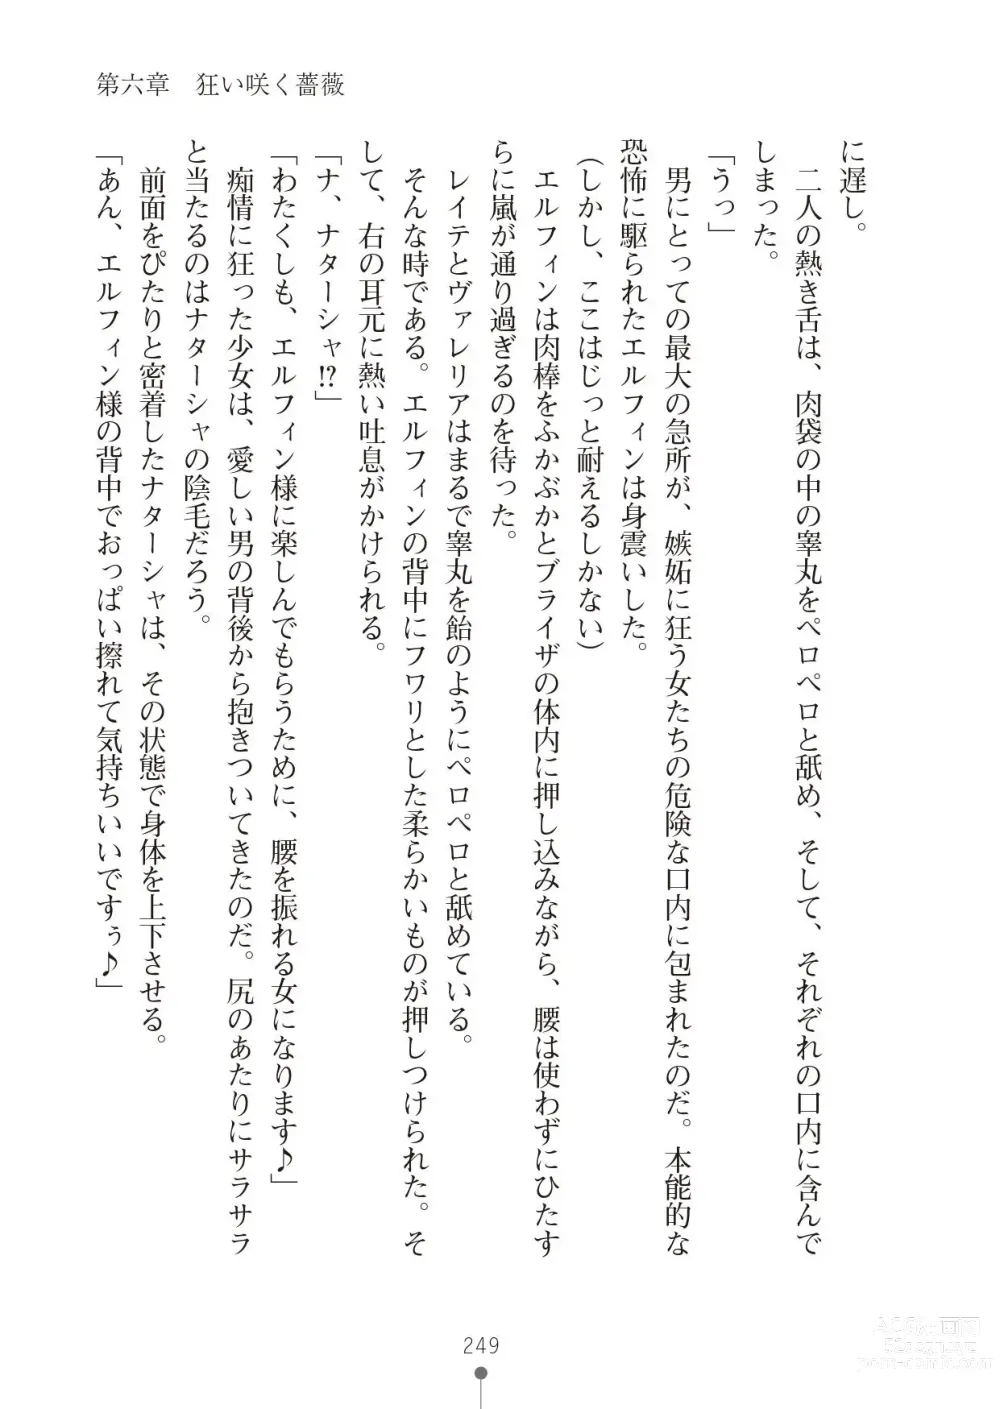 Page 249 of manga Harem Resistance 2